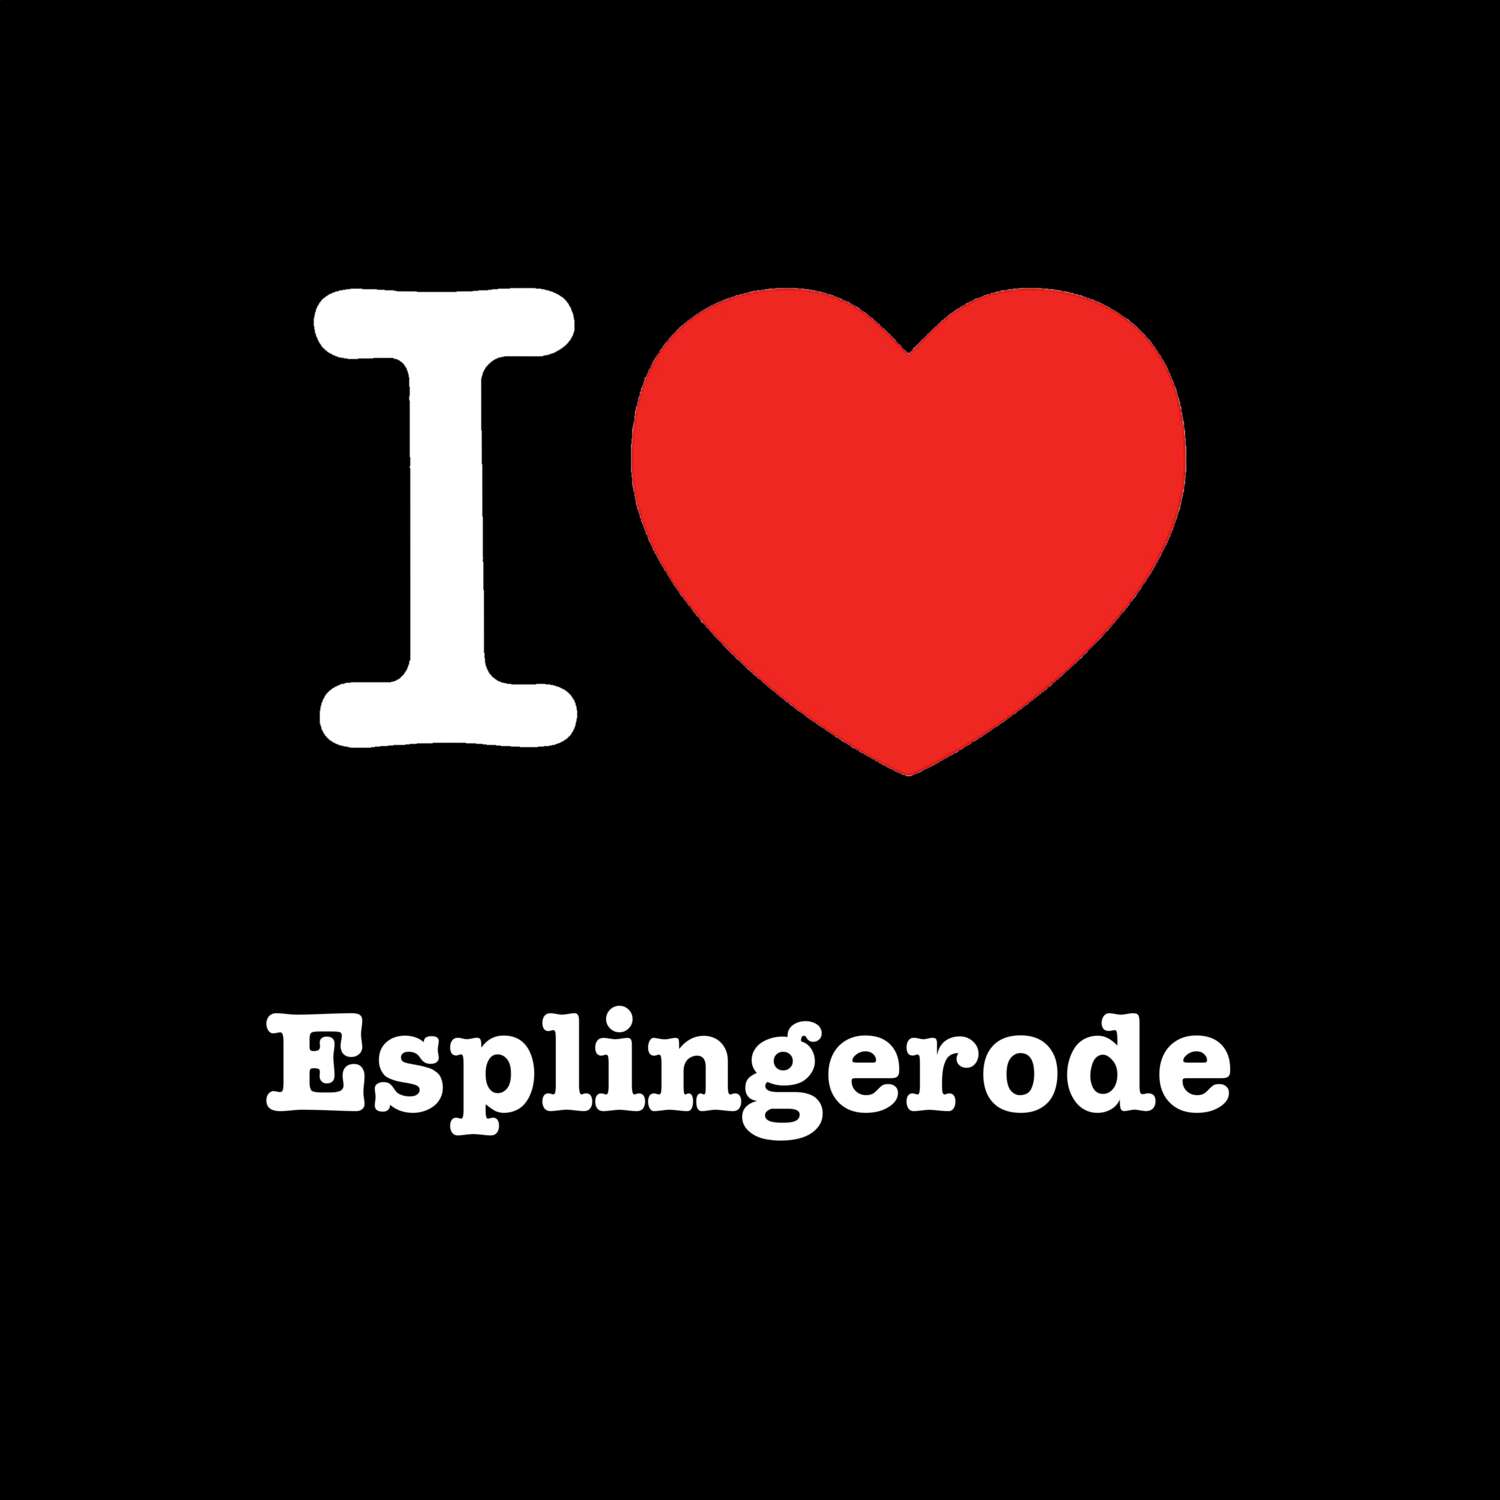 Esplingerode T-Shirt »I love«